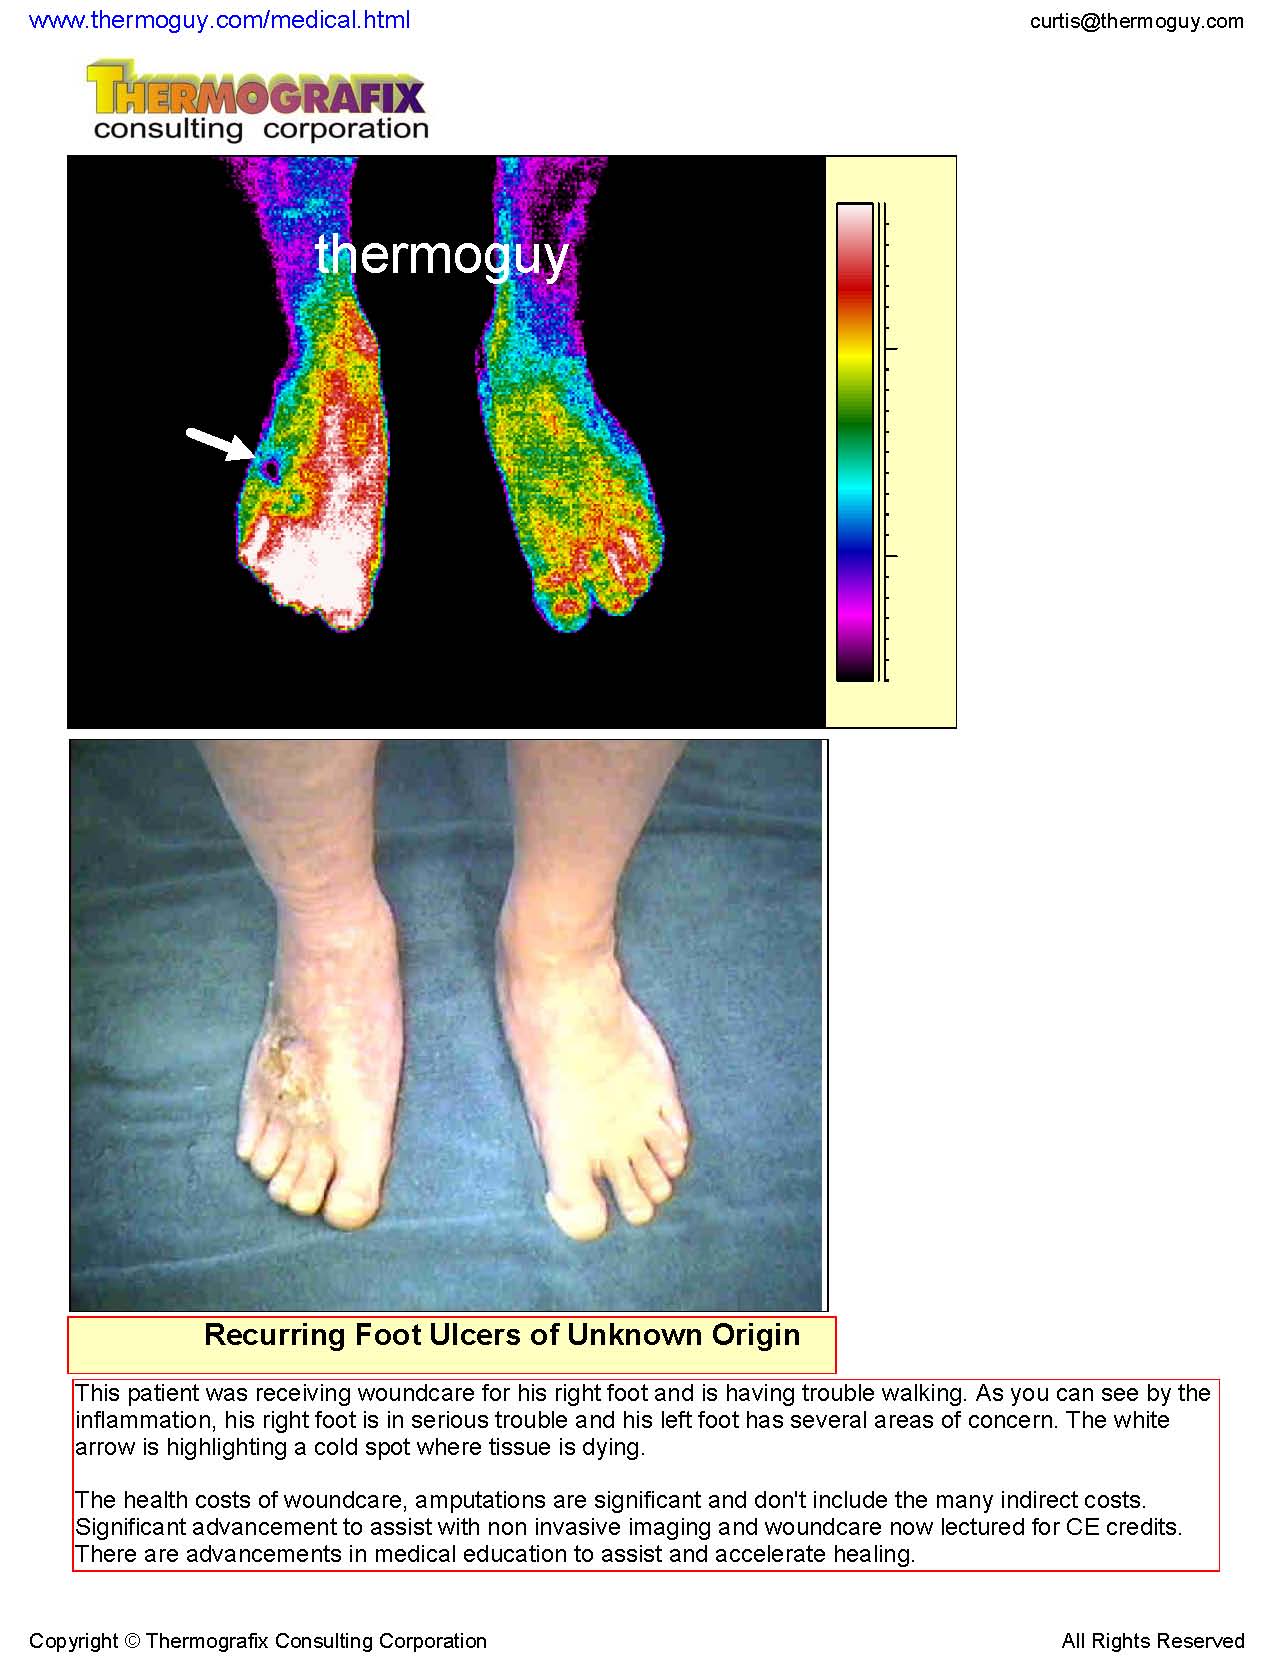 20130214-Recurring Foot Ulcers of Unknown Origin